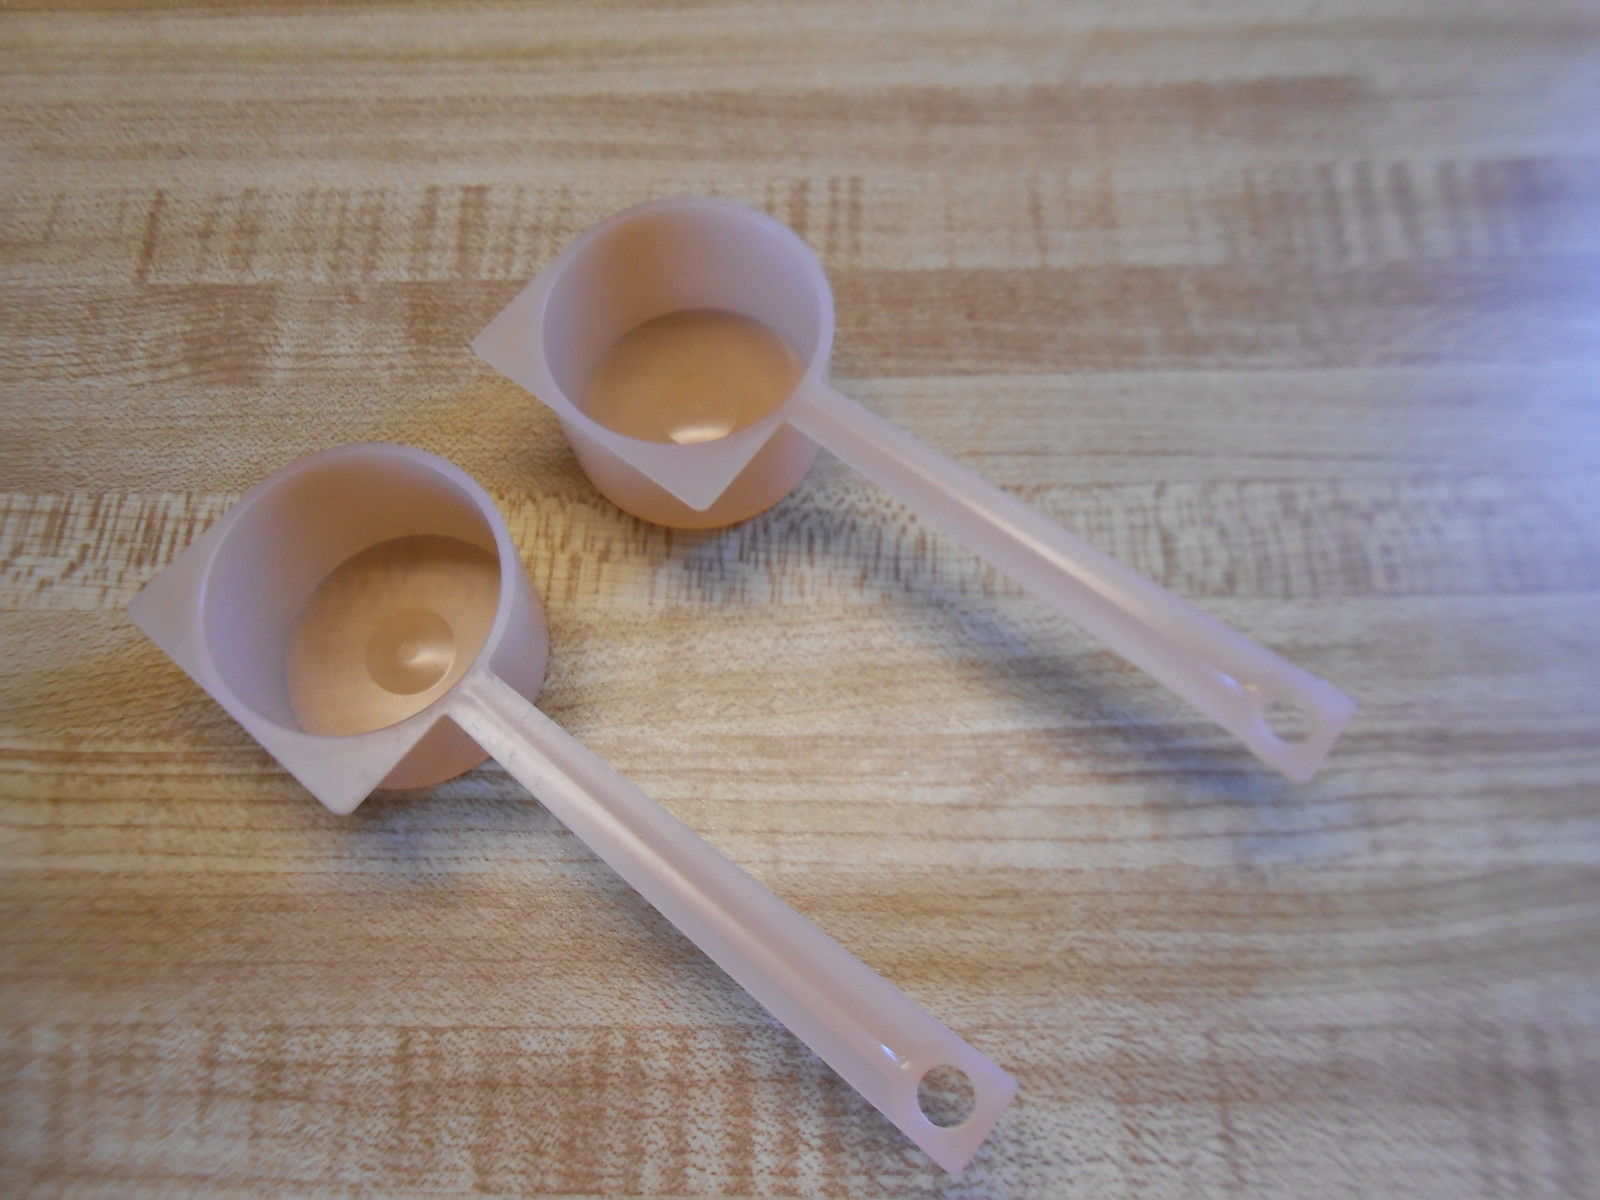 Fayomir Cookie Scoop Set - Small/1 Tablespoon, Medium/2 Tablespoon, Large/3